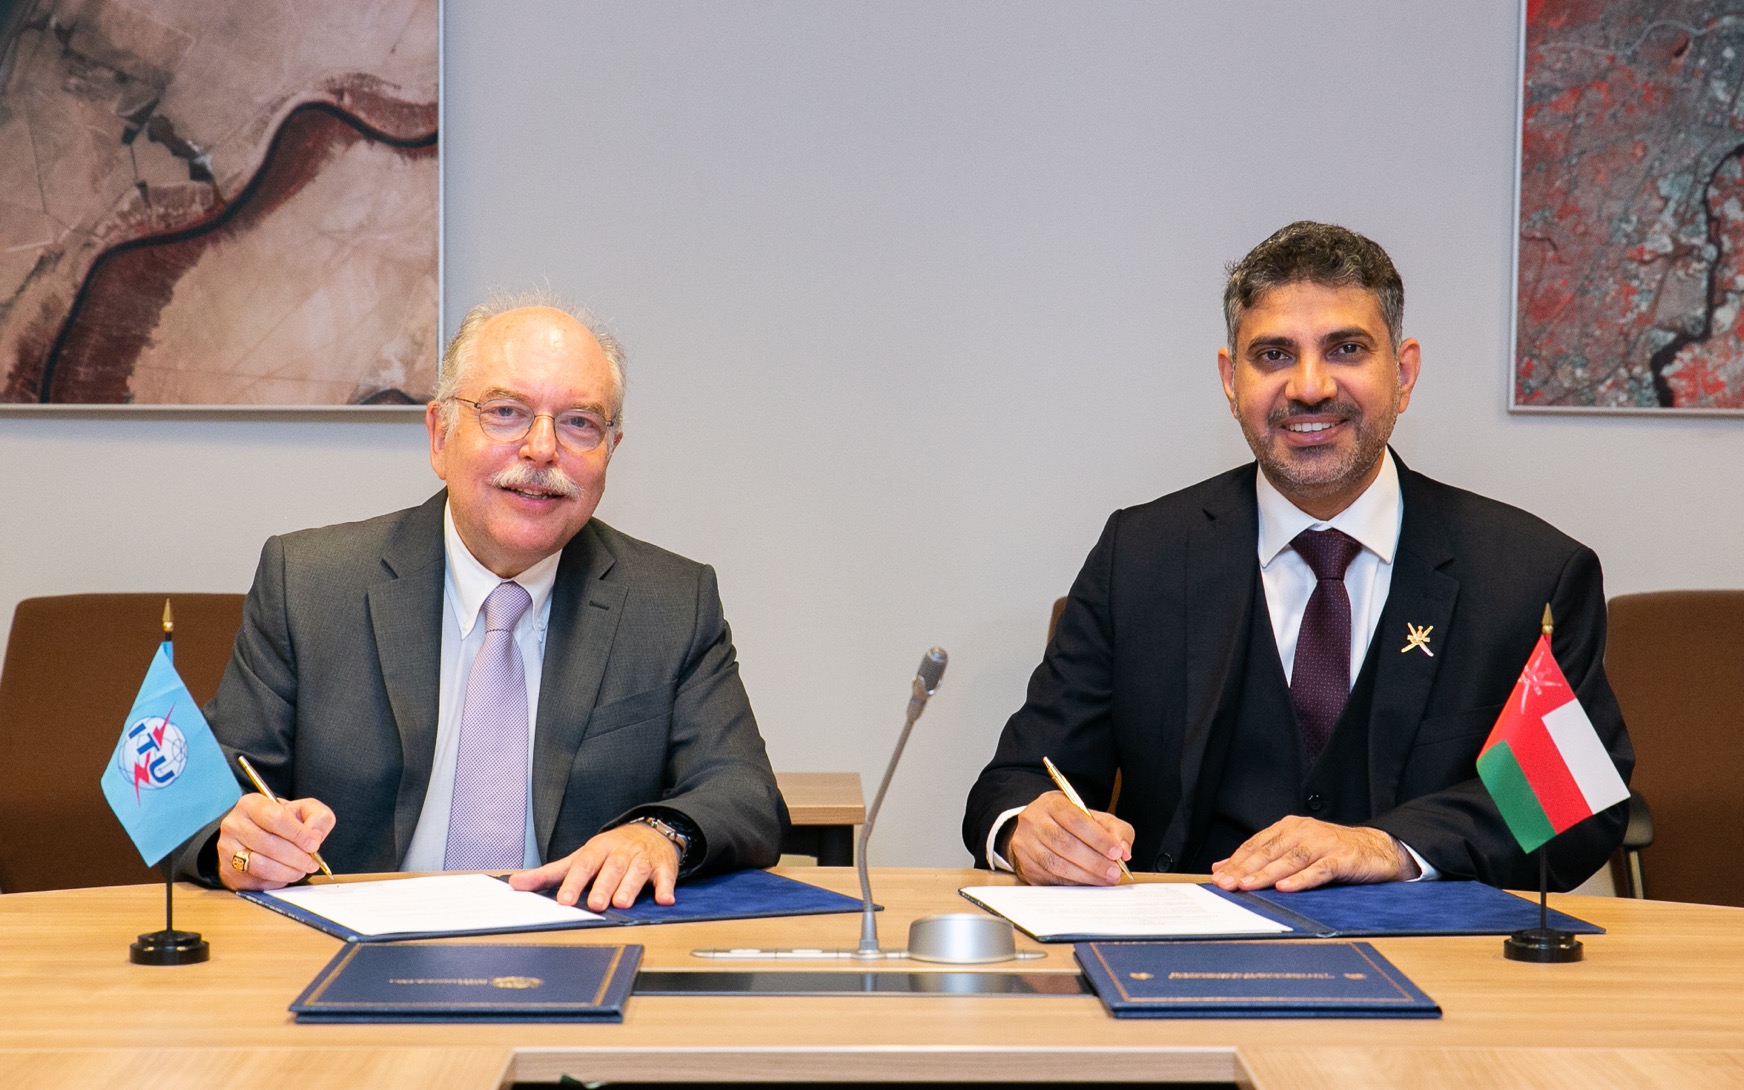 ITU Radiocommunication Bureau Director Mario Maniewicz (left) and H.E. Omar Hamdan Al-Ismaili, Executive President of TRA Oman, sign the Memorandum of Understanding at ITU headquarters in Geneva, Switzerland.